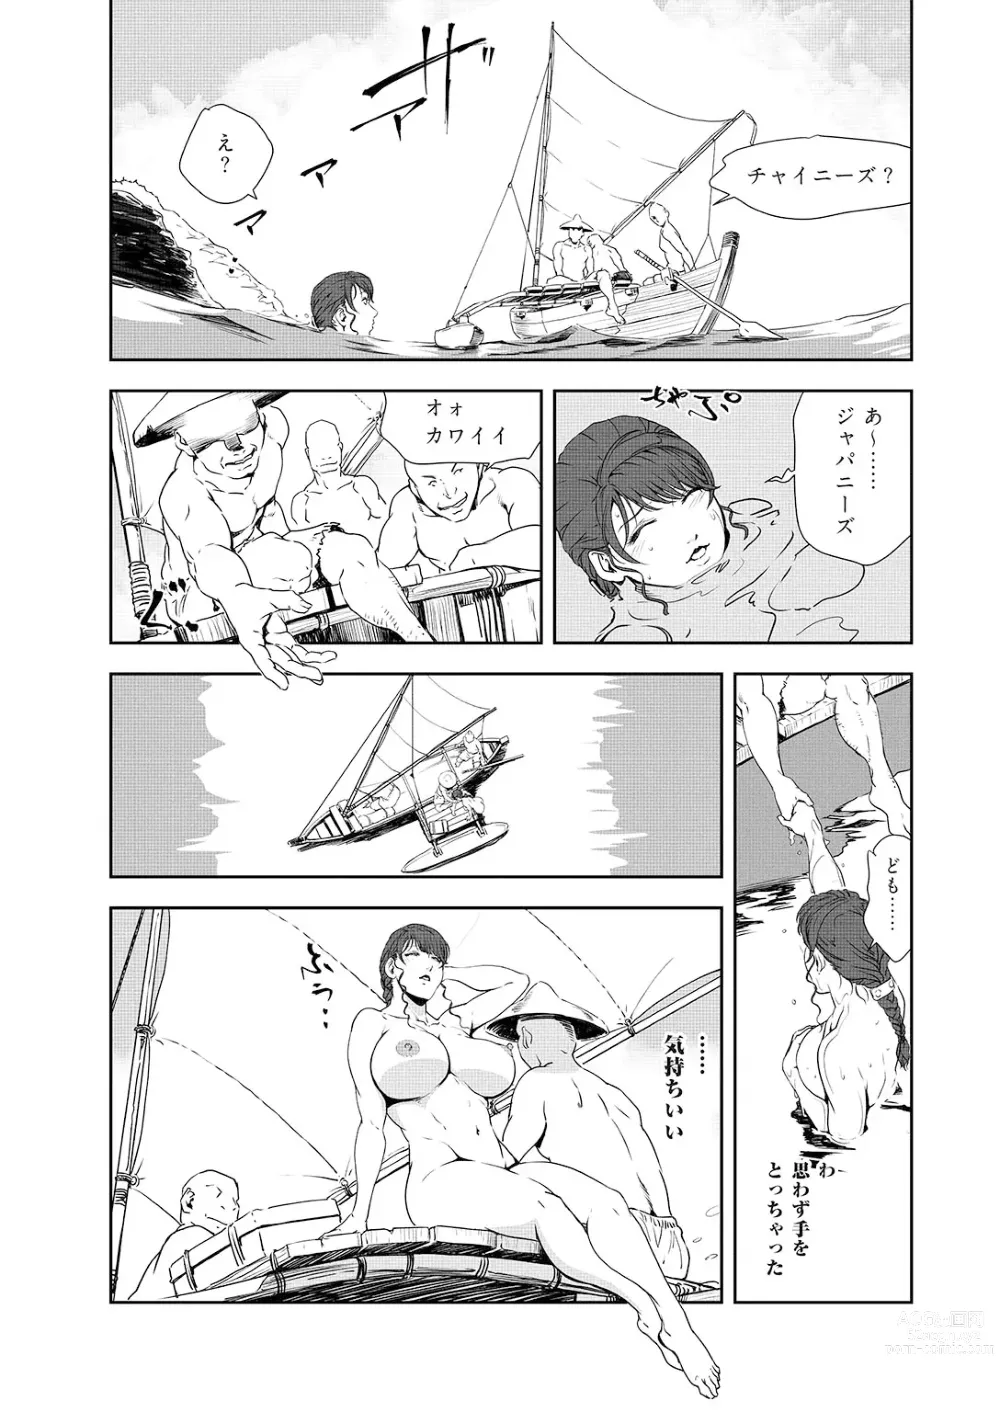 Page 16 of manga Nikuhisyo Yukiko 44